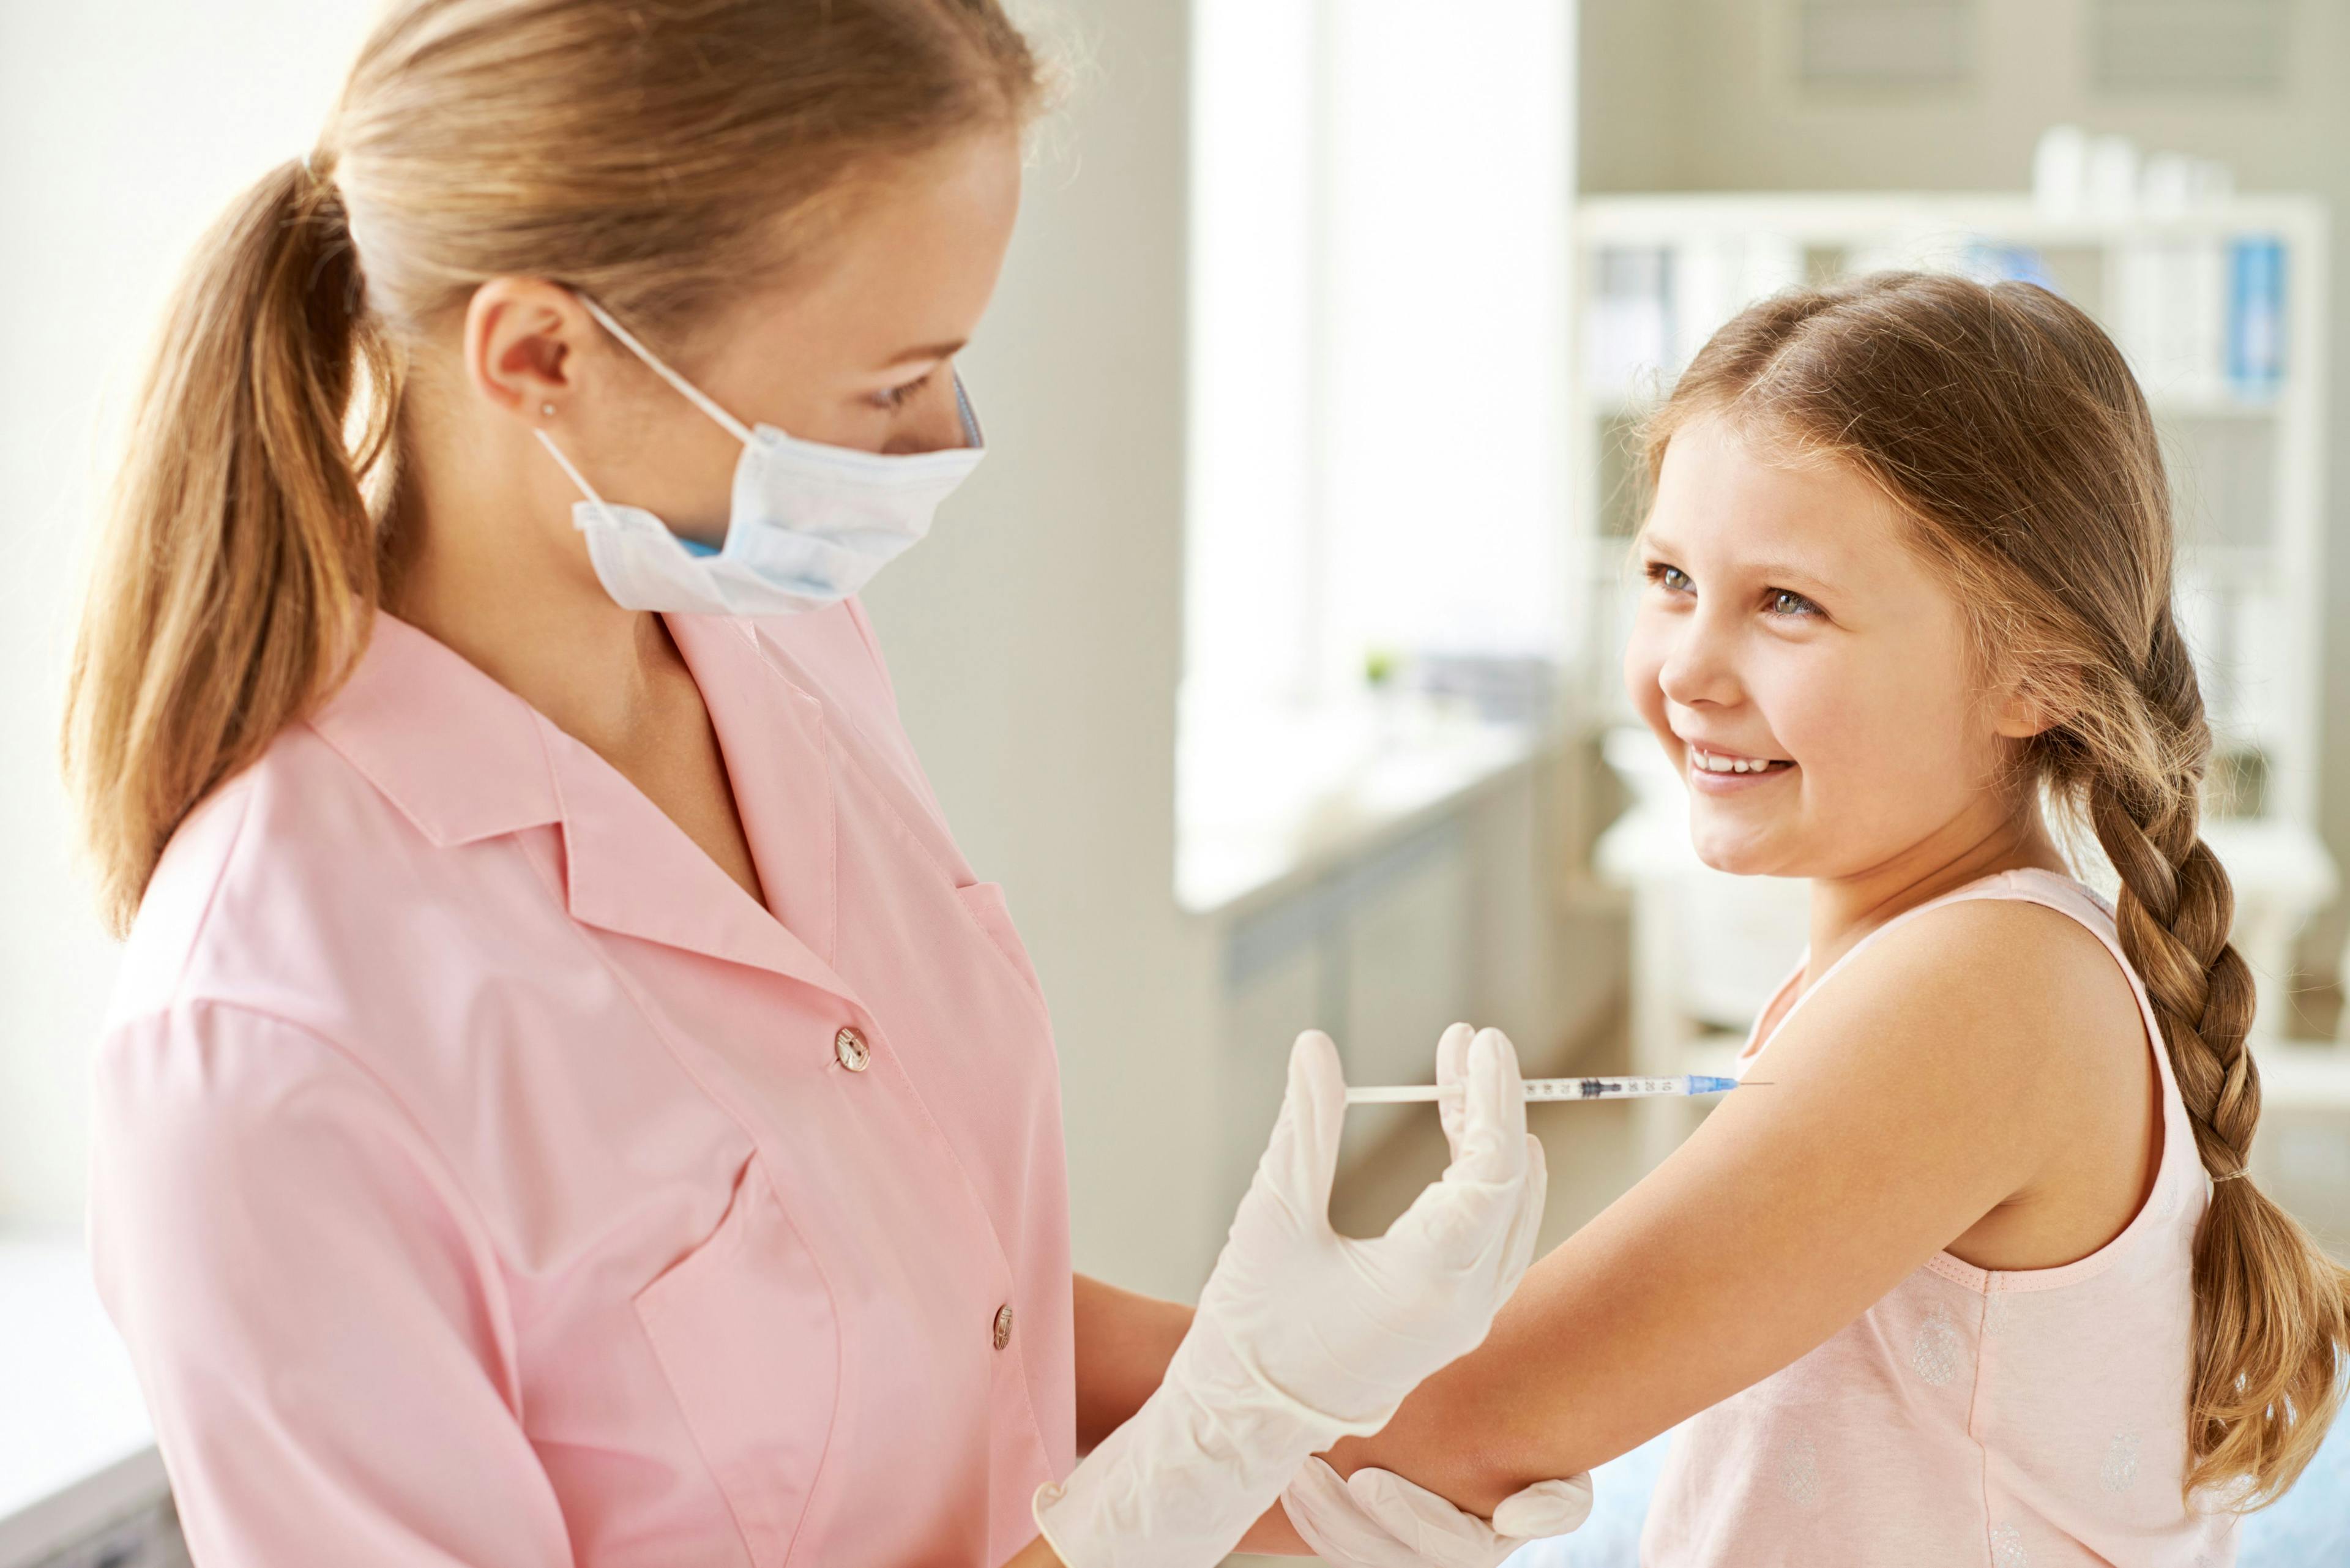 Gauging Pharmacists’ Comfort Immunizing Young Children